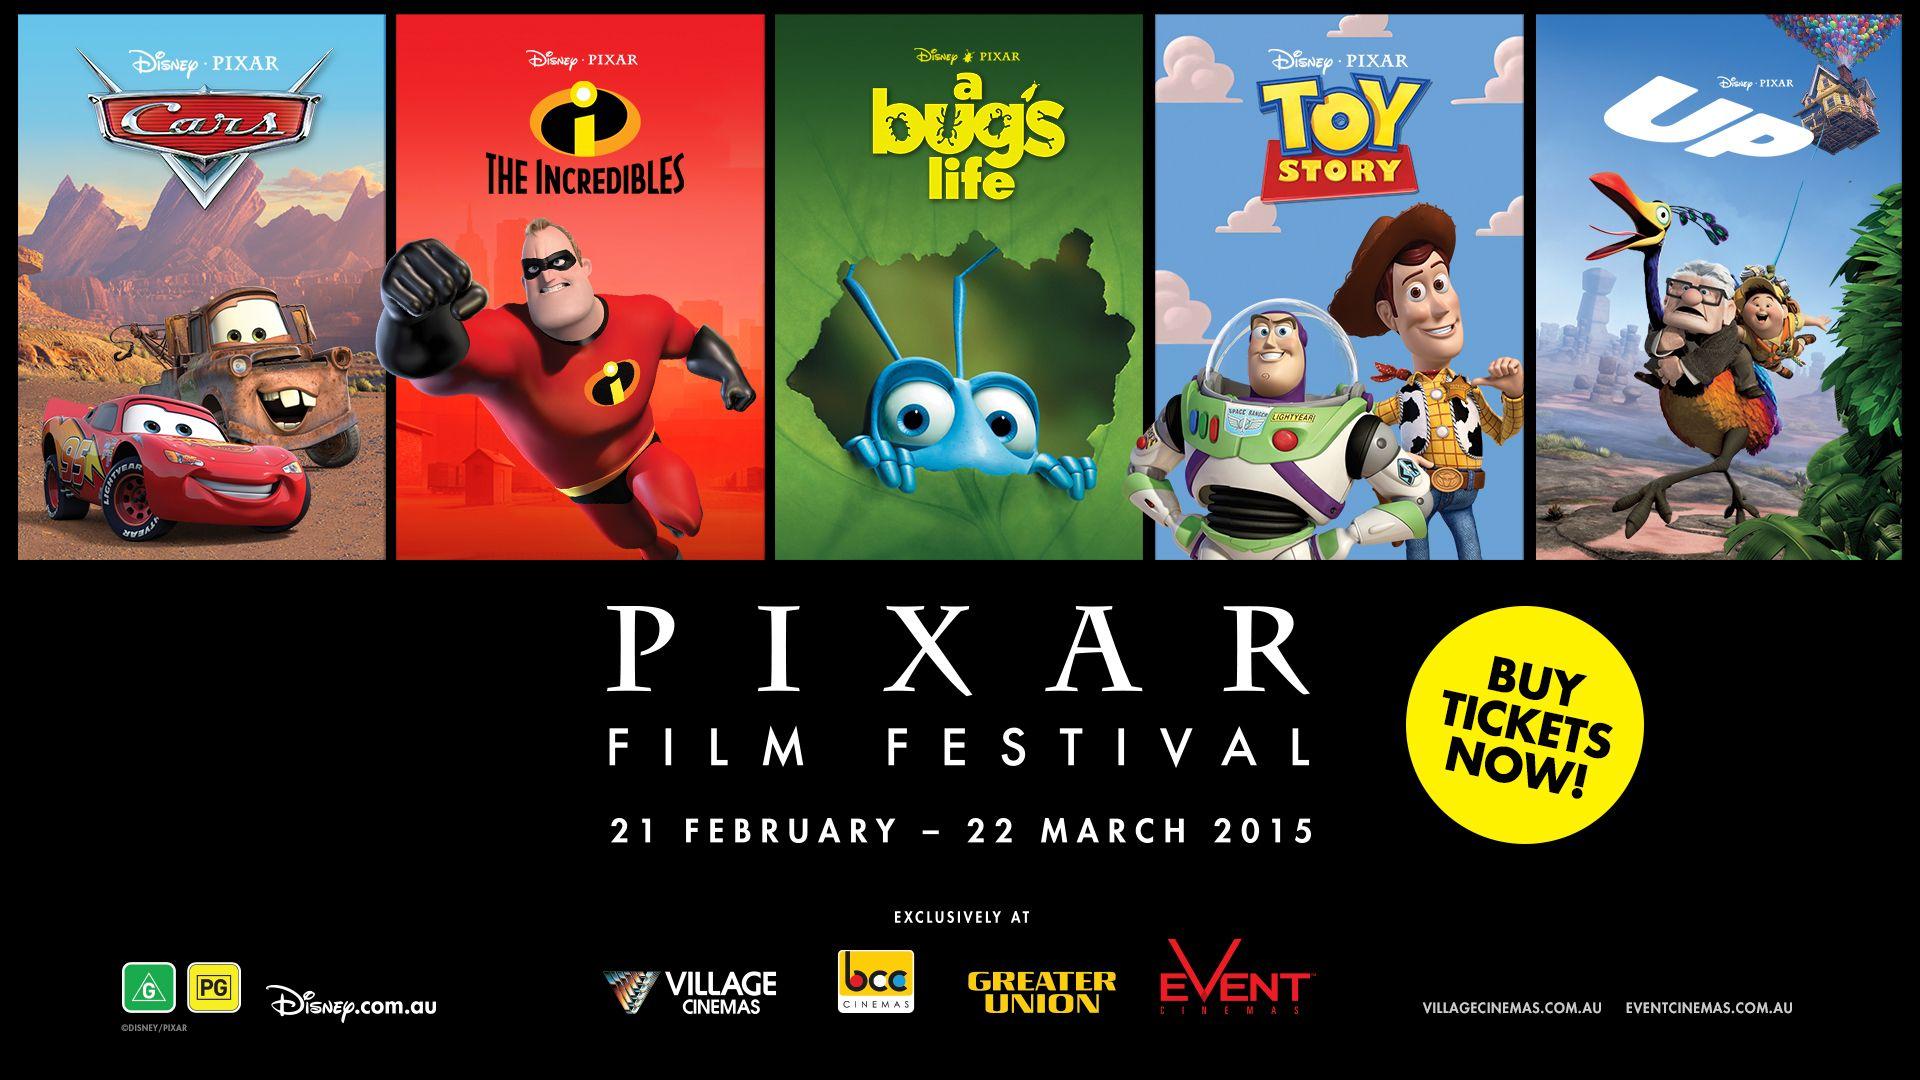 Disney Pixar Films Logo - PIXAR FILM FESTIVAL LINE UP - FEB 21 - MAR 22 - Impulse Gamer